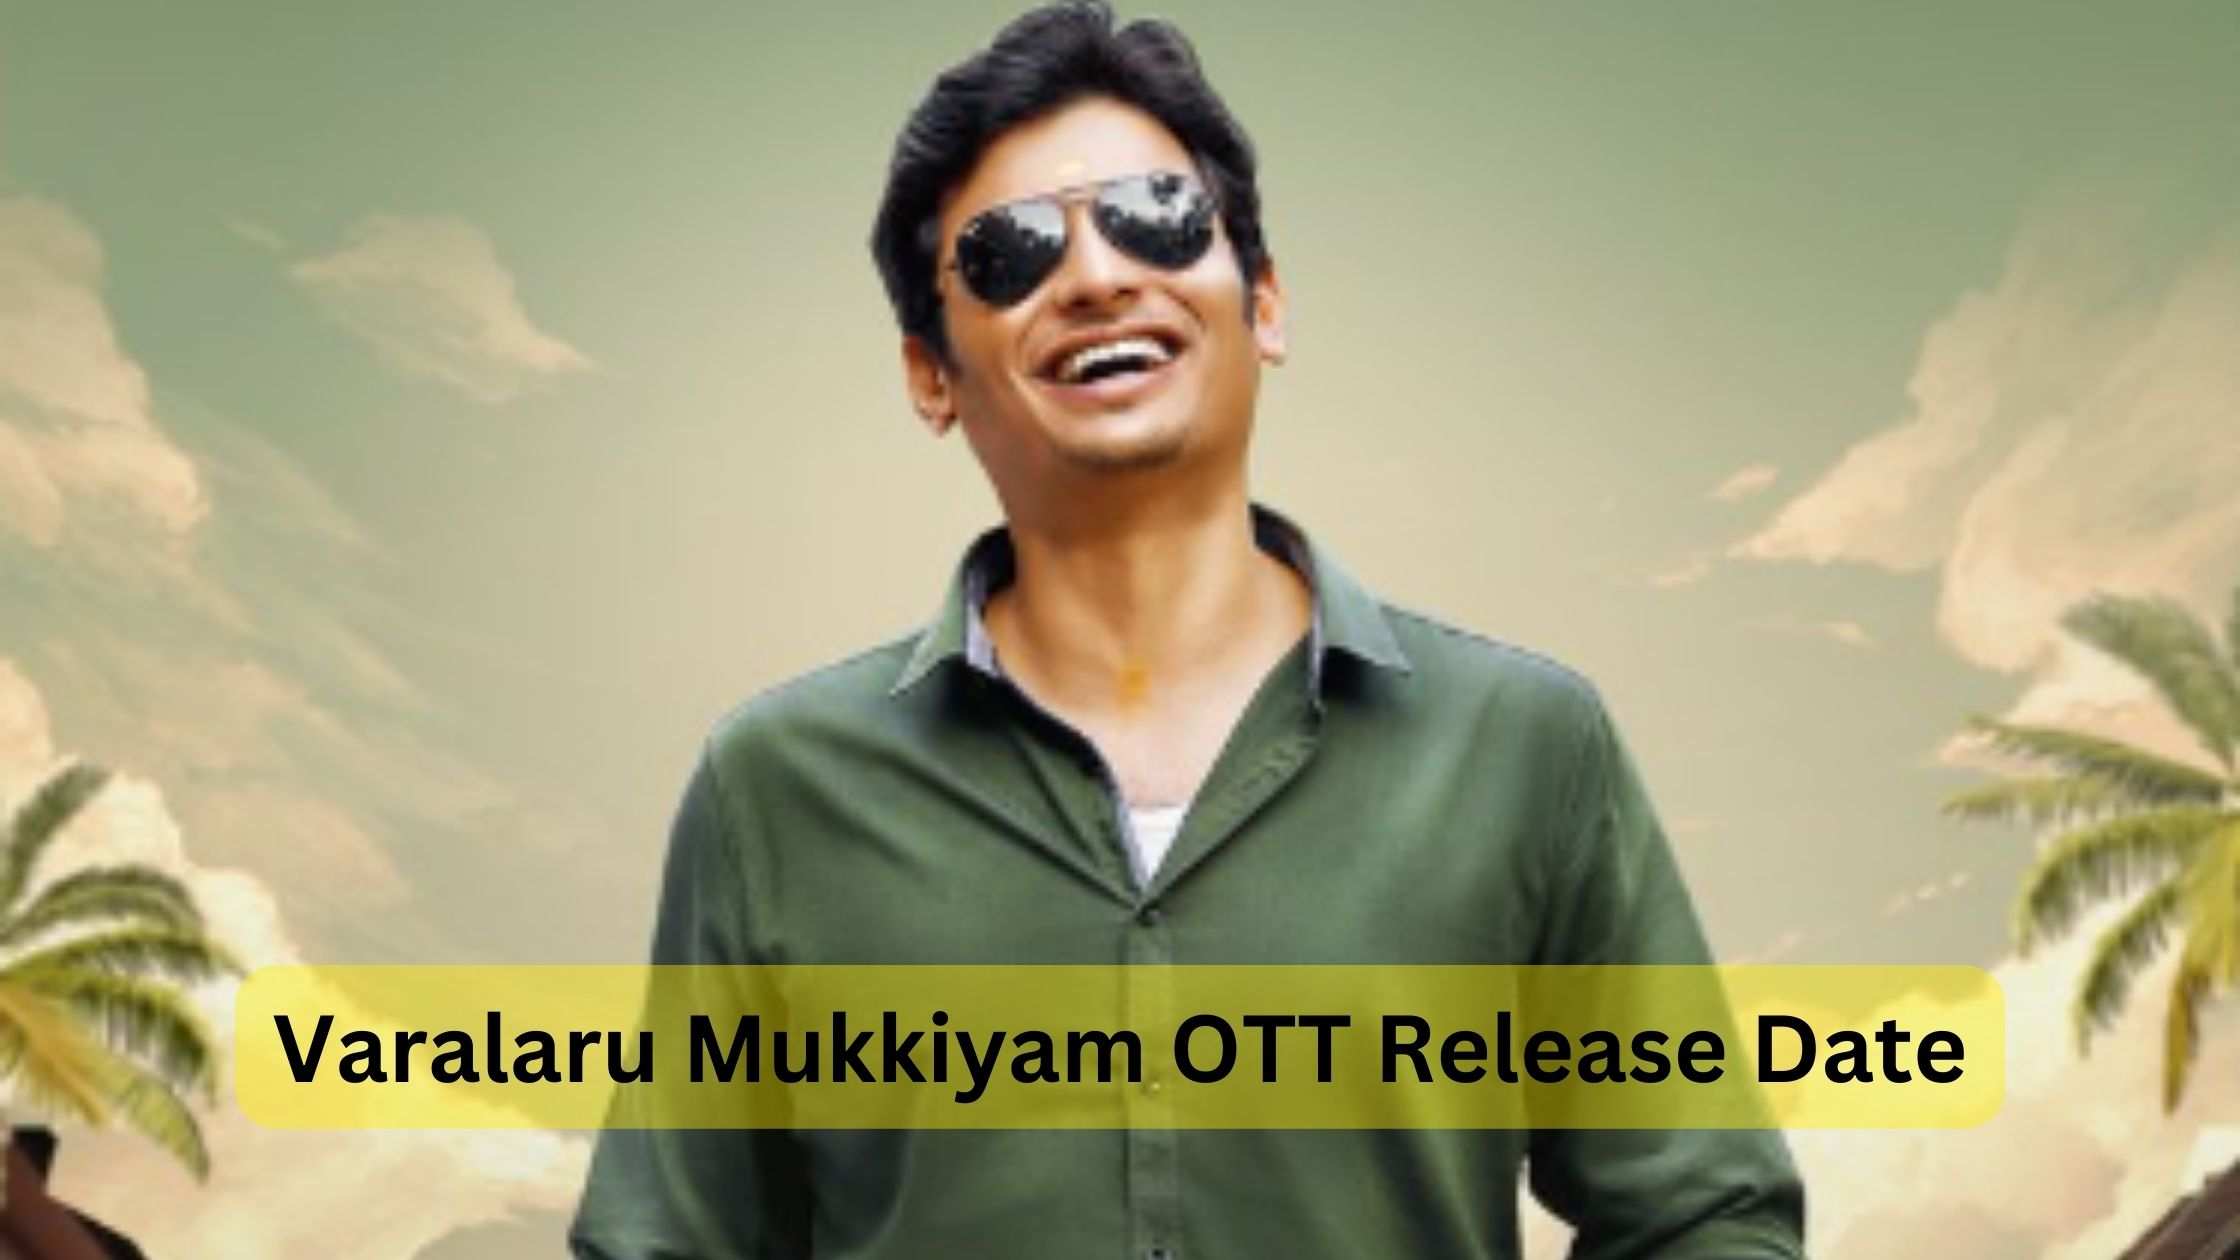 Varalaru Mukkiyam OTT Release Date